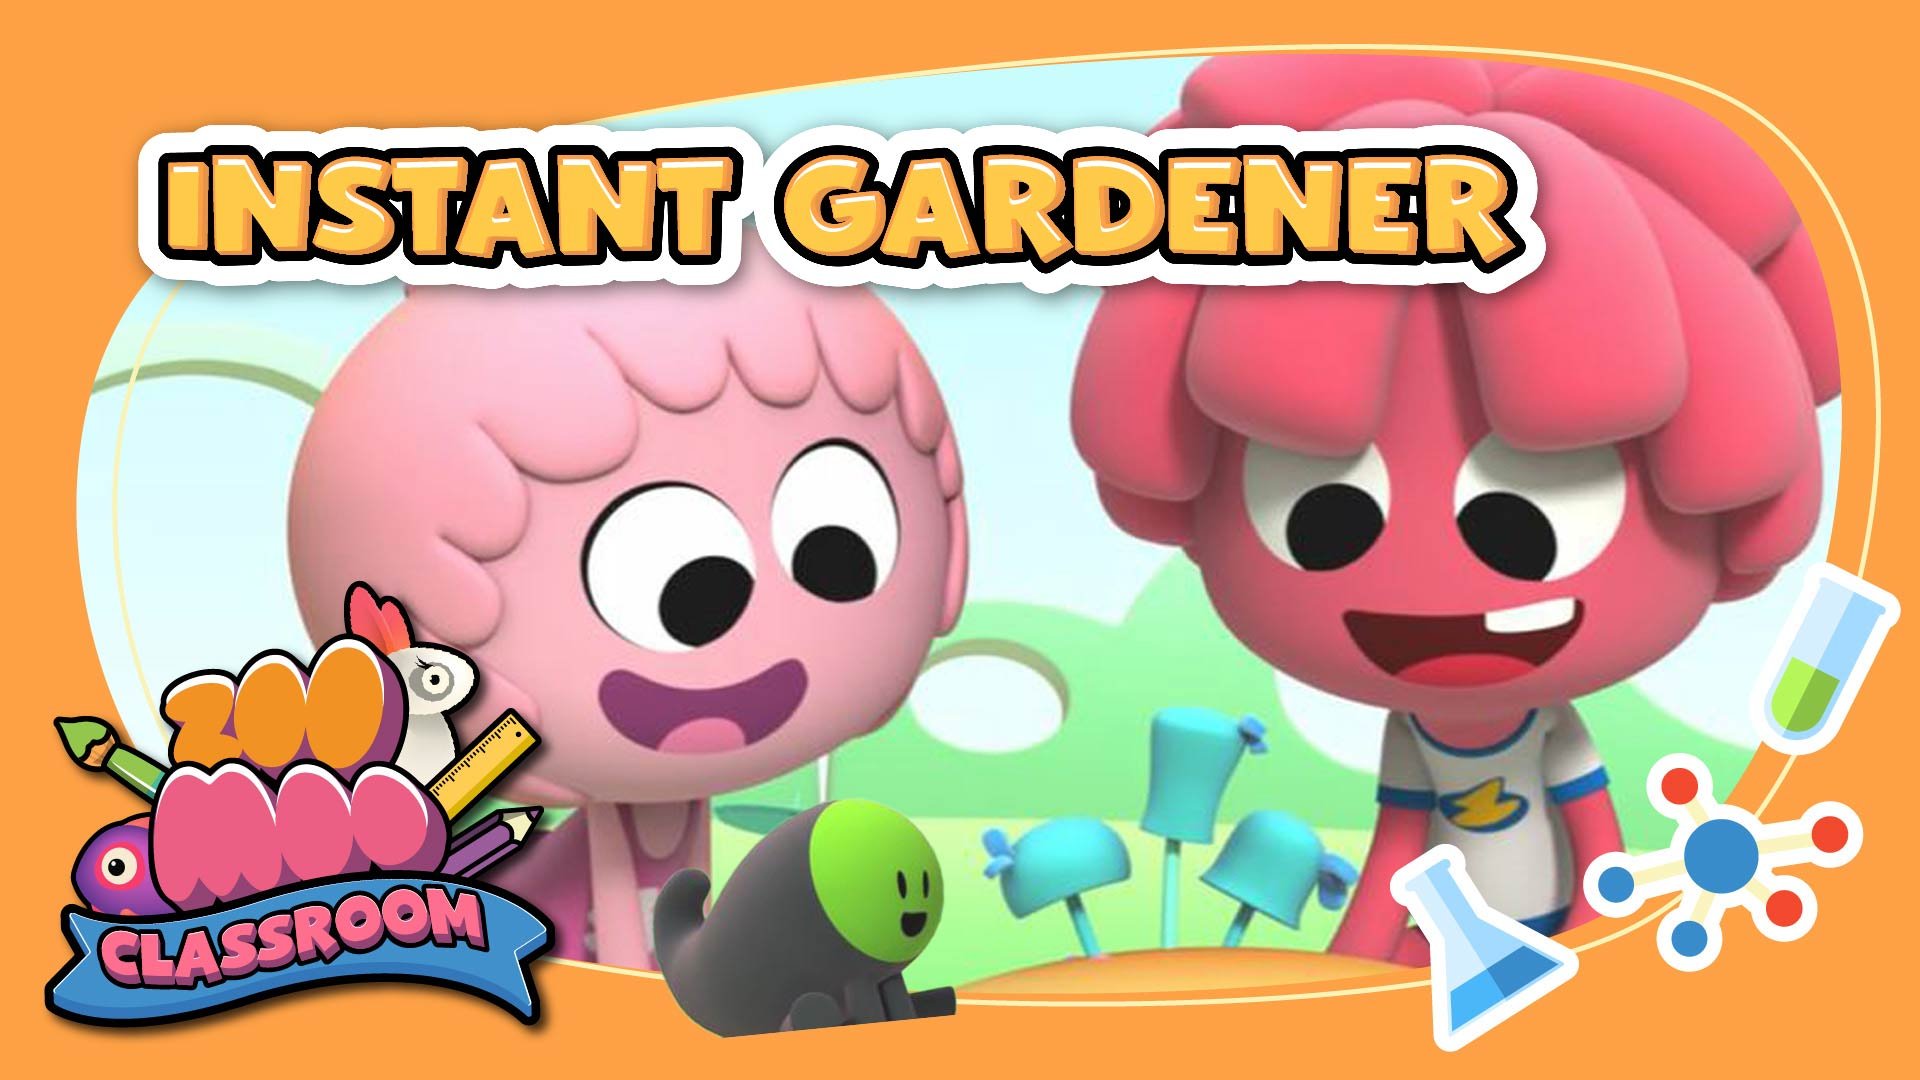 The Instant Gardener | Jelly Jamm | Cartoon for Kids